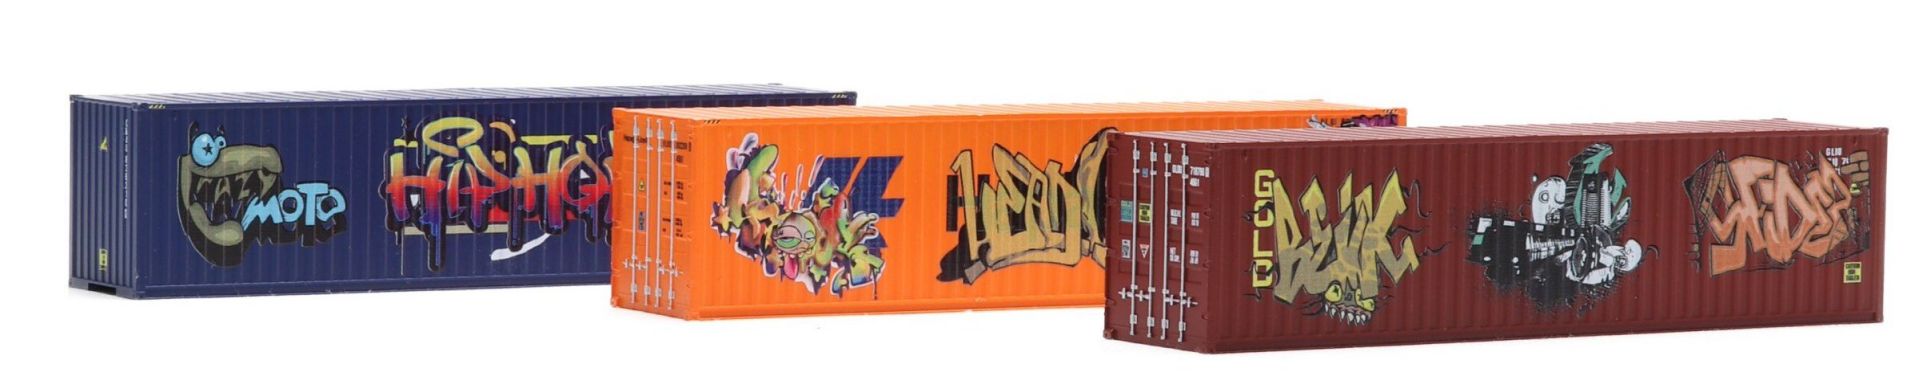 igra 98010011 - 3er Set Container Set 'Graffiti'